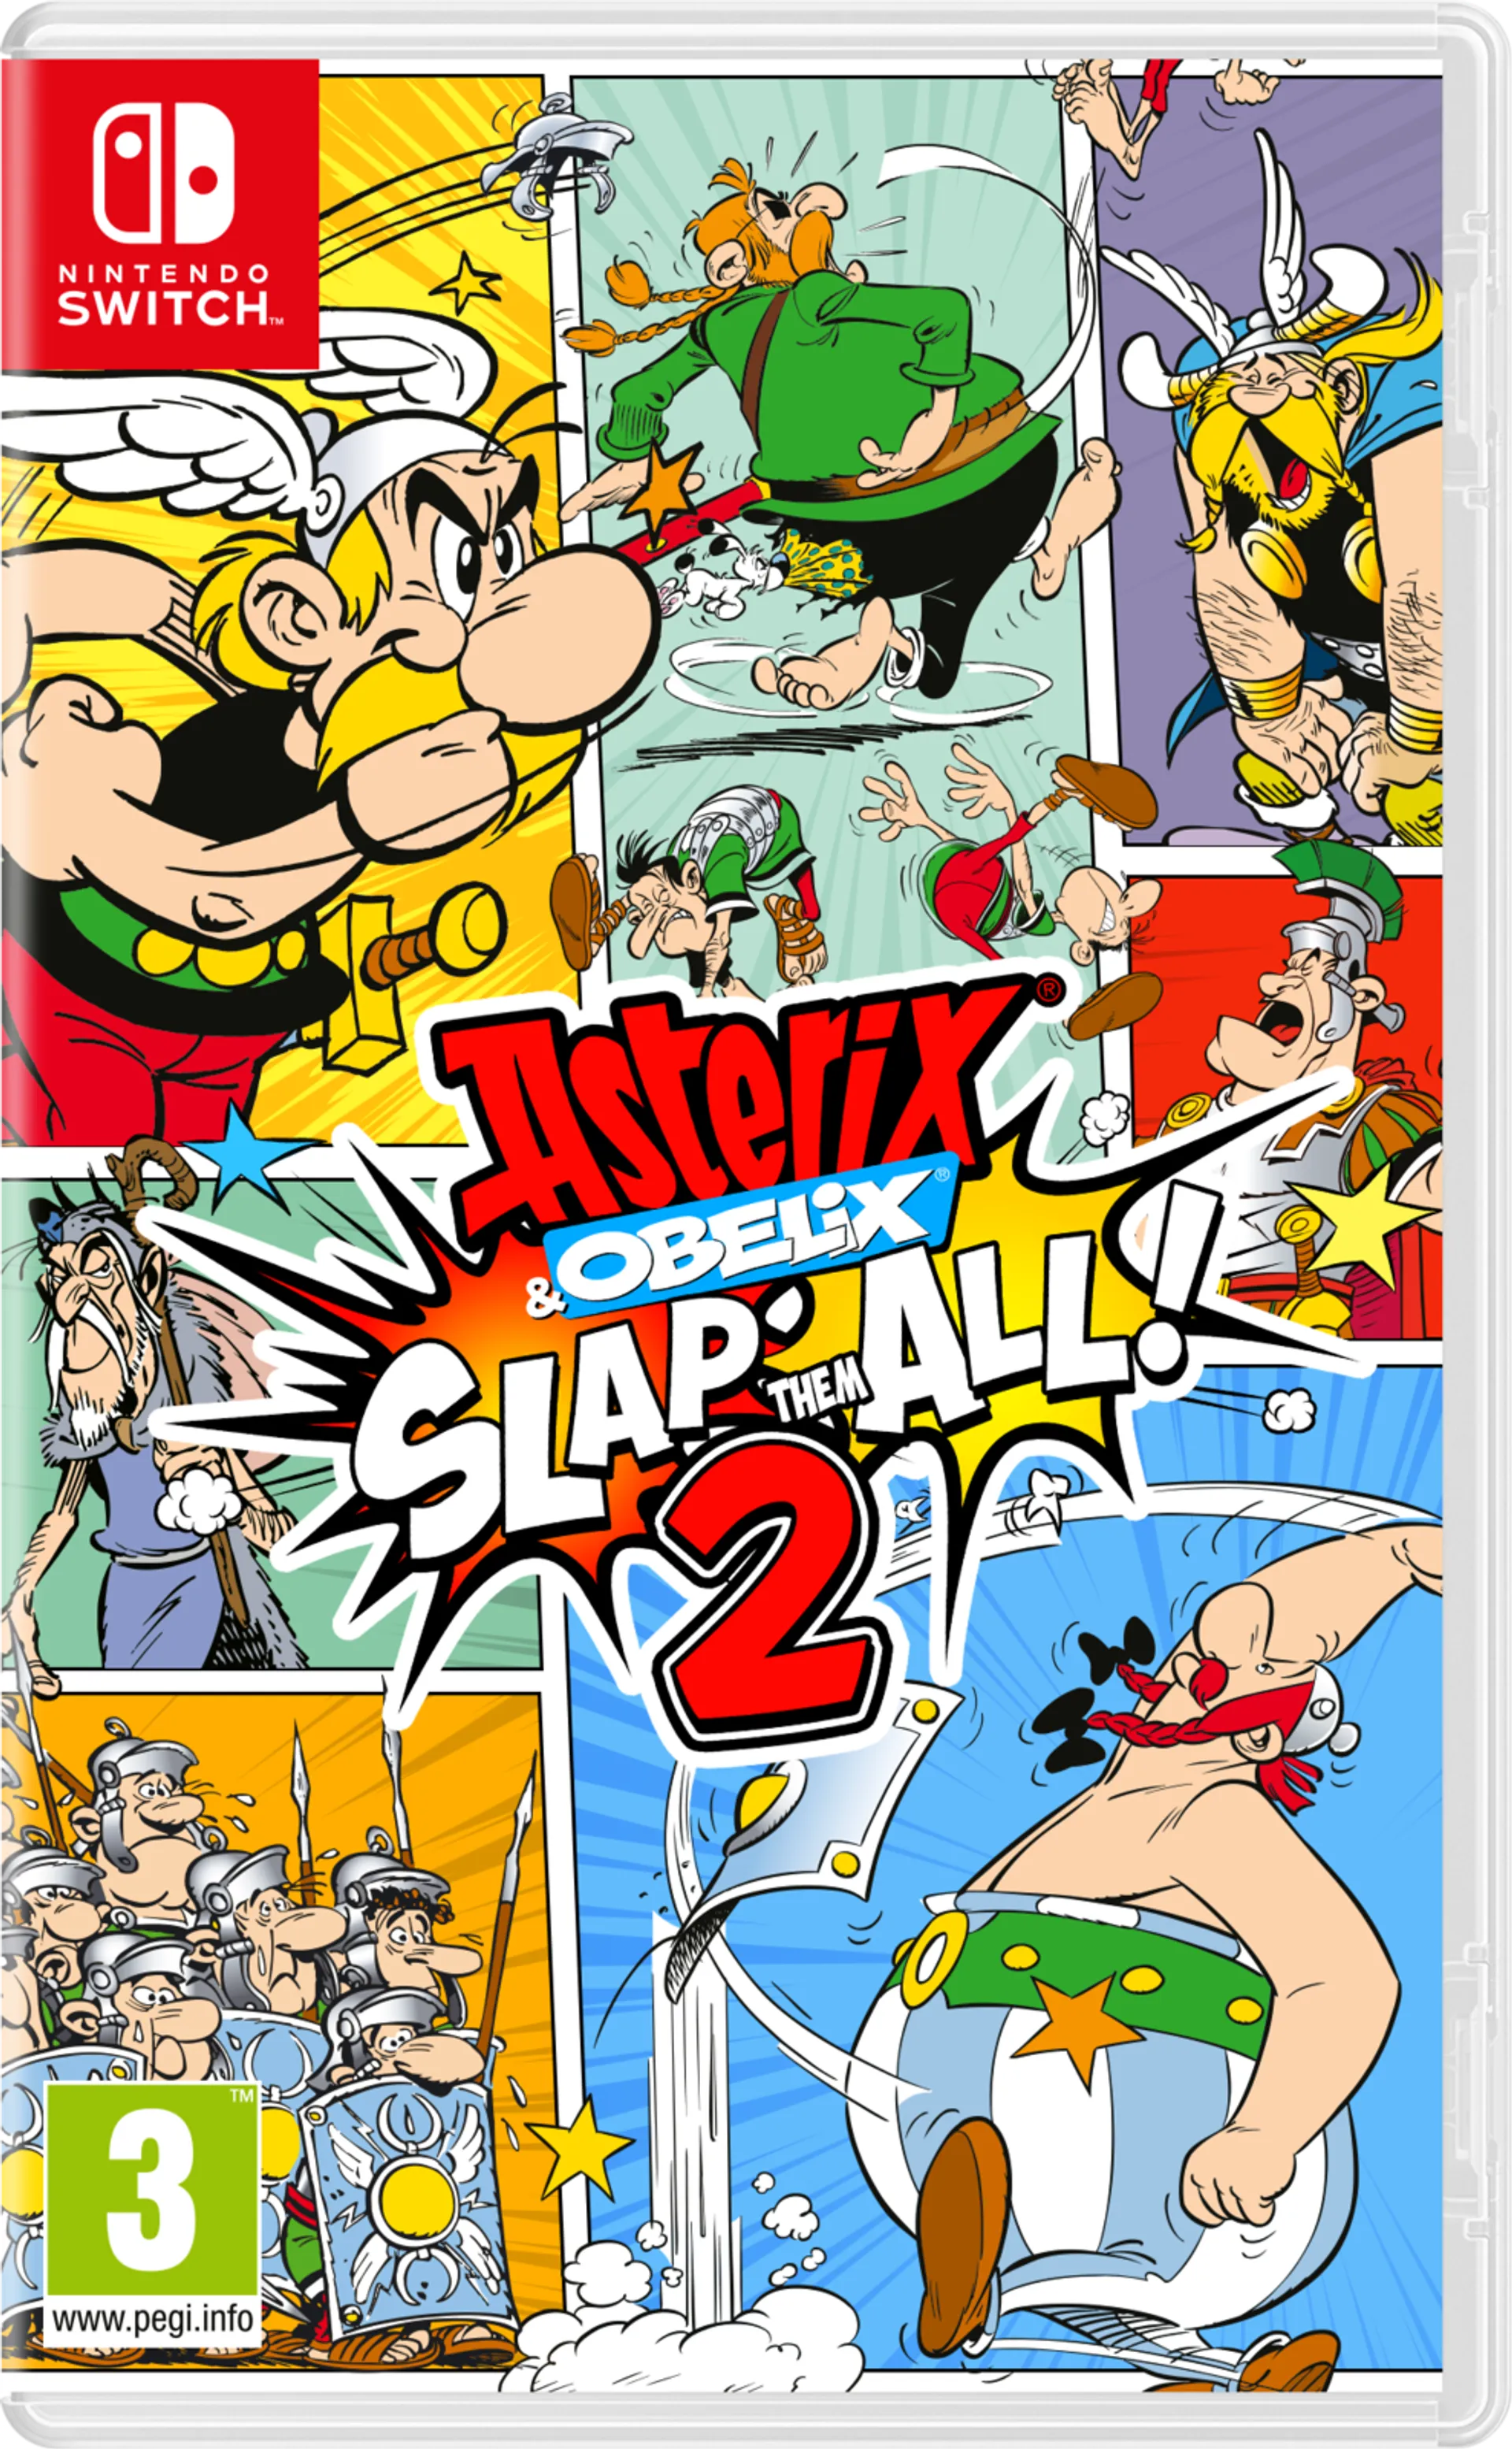 NSW Asterix & Obelix Slap Them All 2